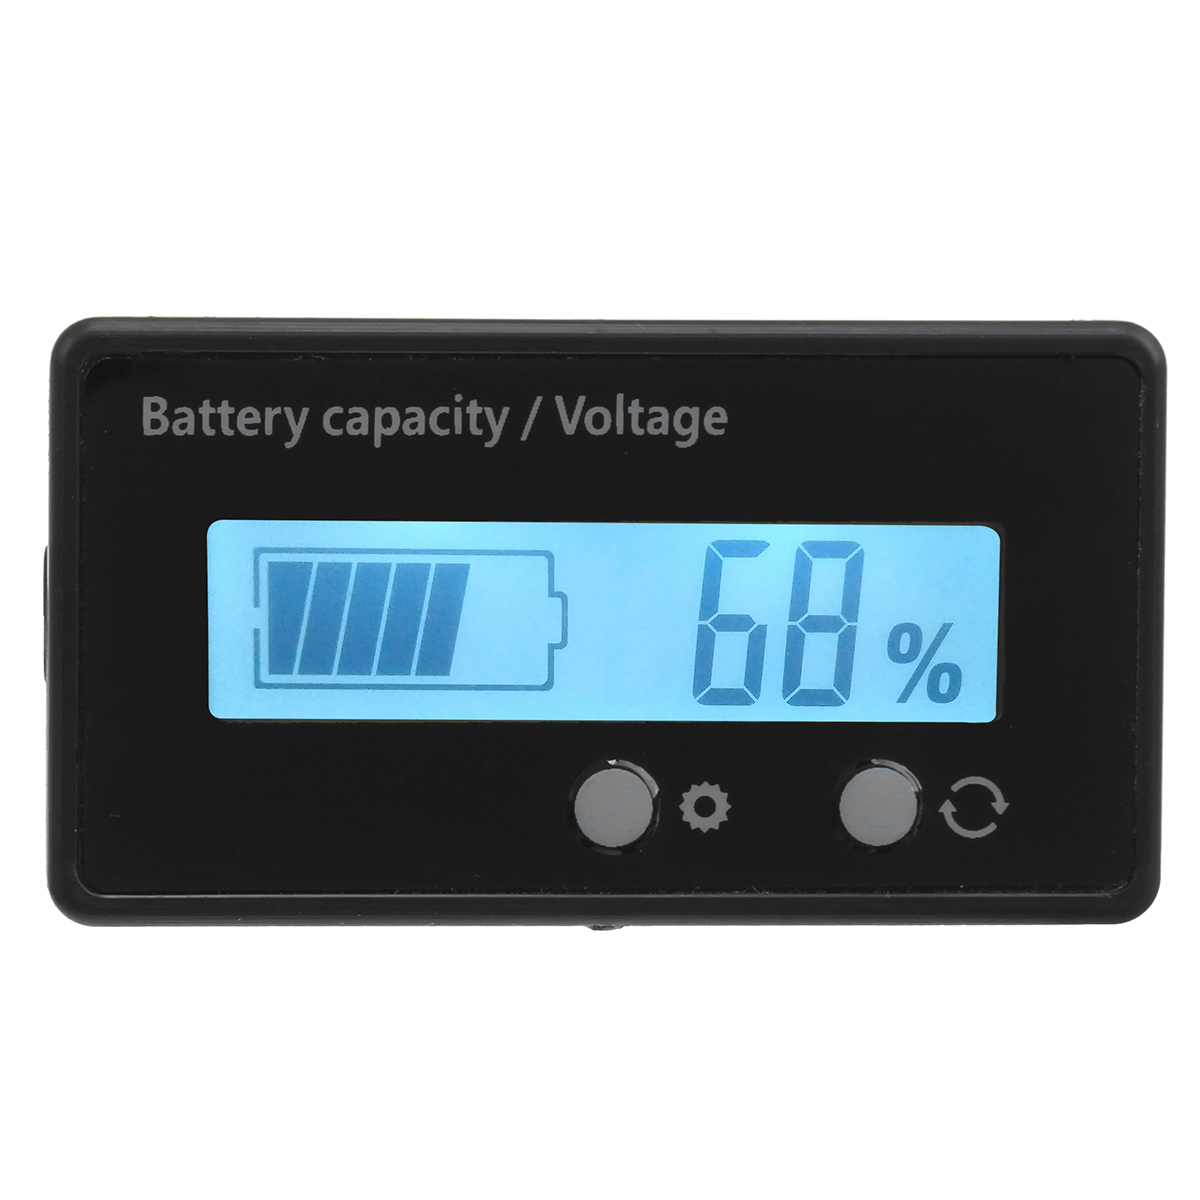 Battery capacity voltage. Battery capacity indicator Digital Voltmeter. Вольтметр BZK 8.860.137/2 Test AC 2000v 63l18. Battery capacity Voltage инструкция по настройке на русском.